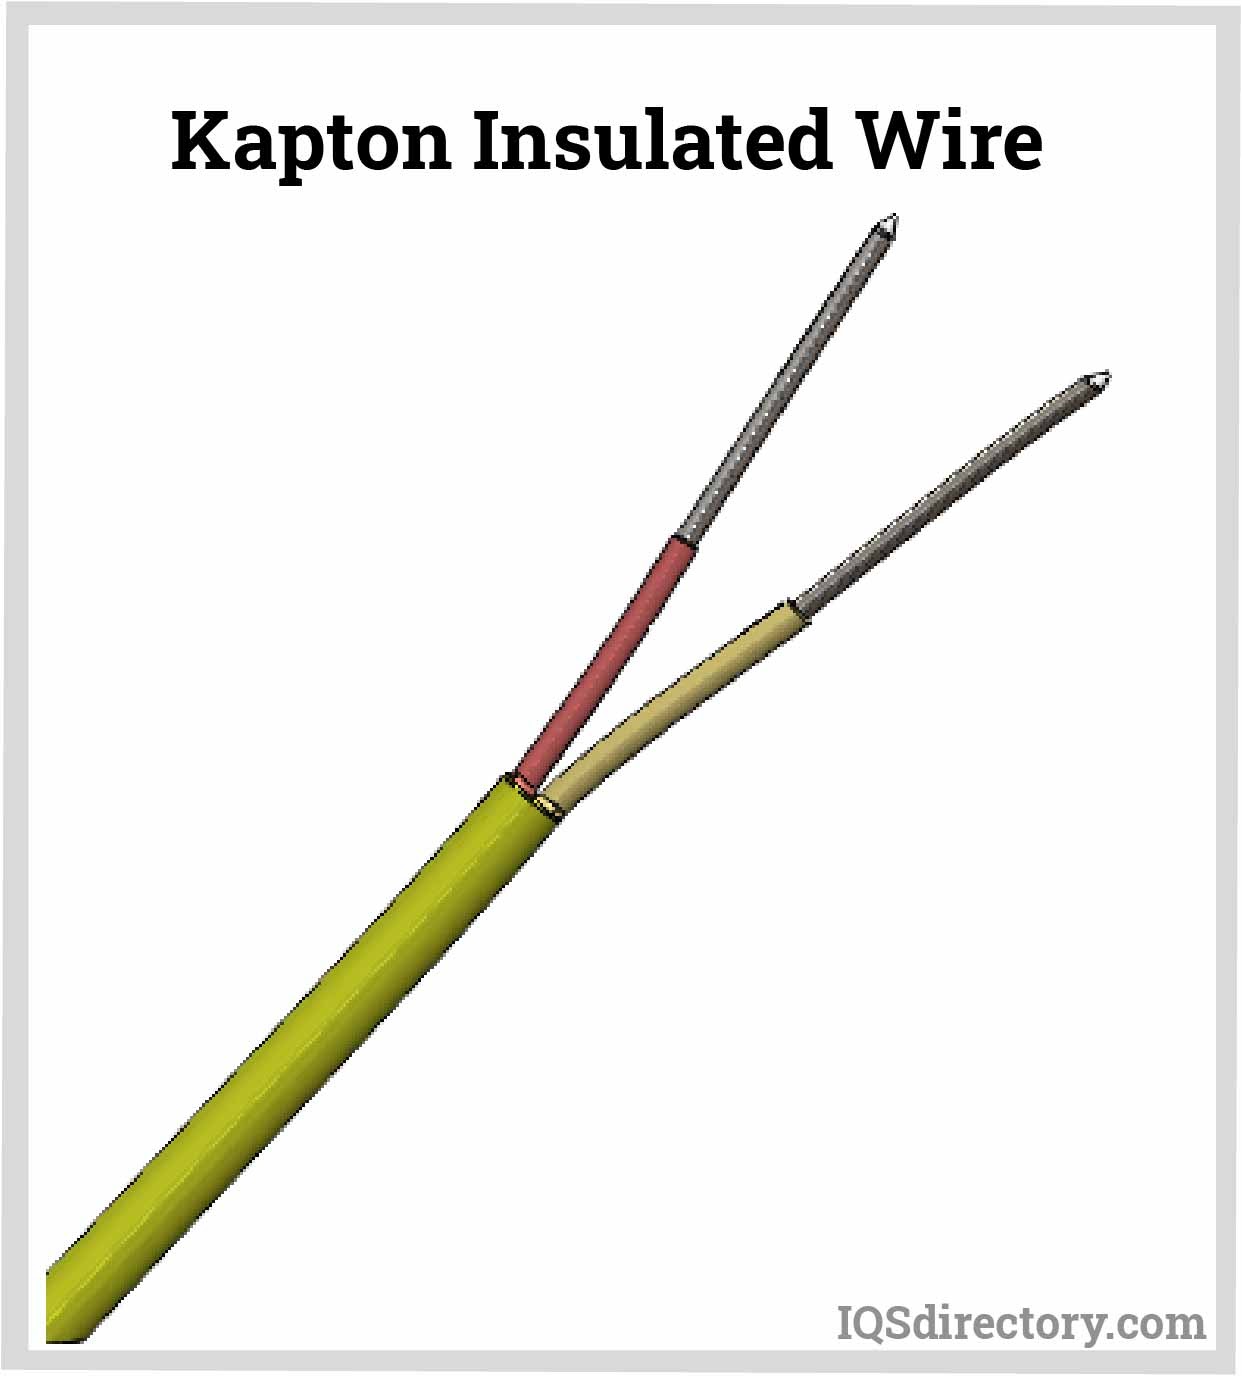 Kapton Insulated Wire